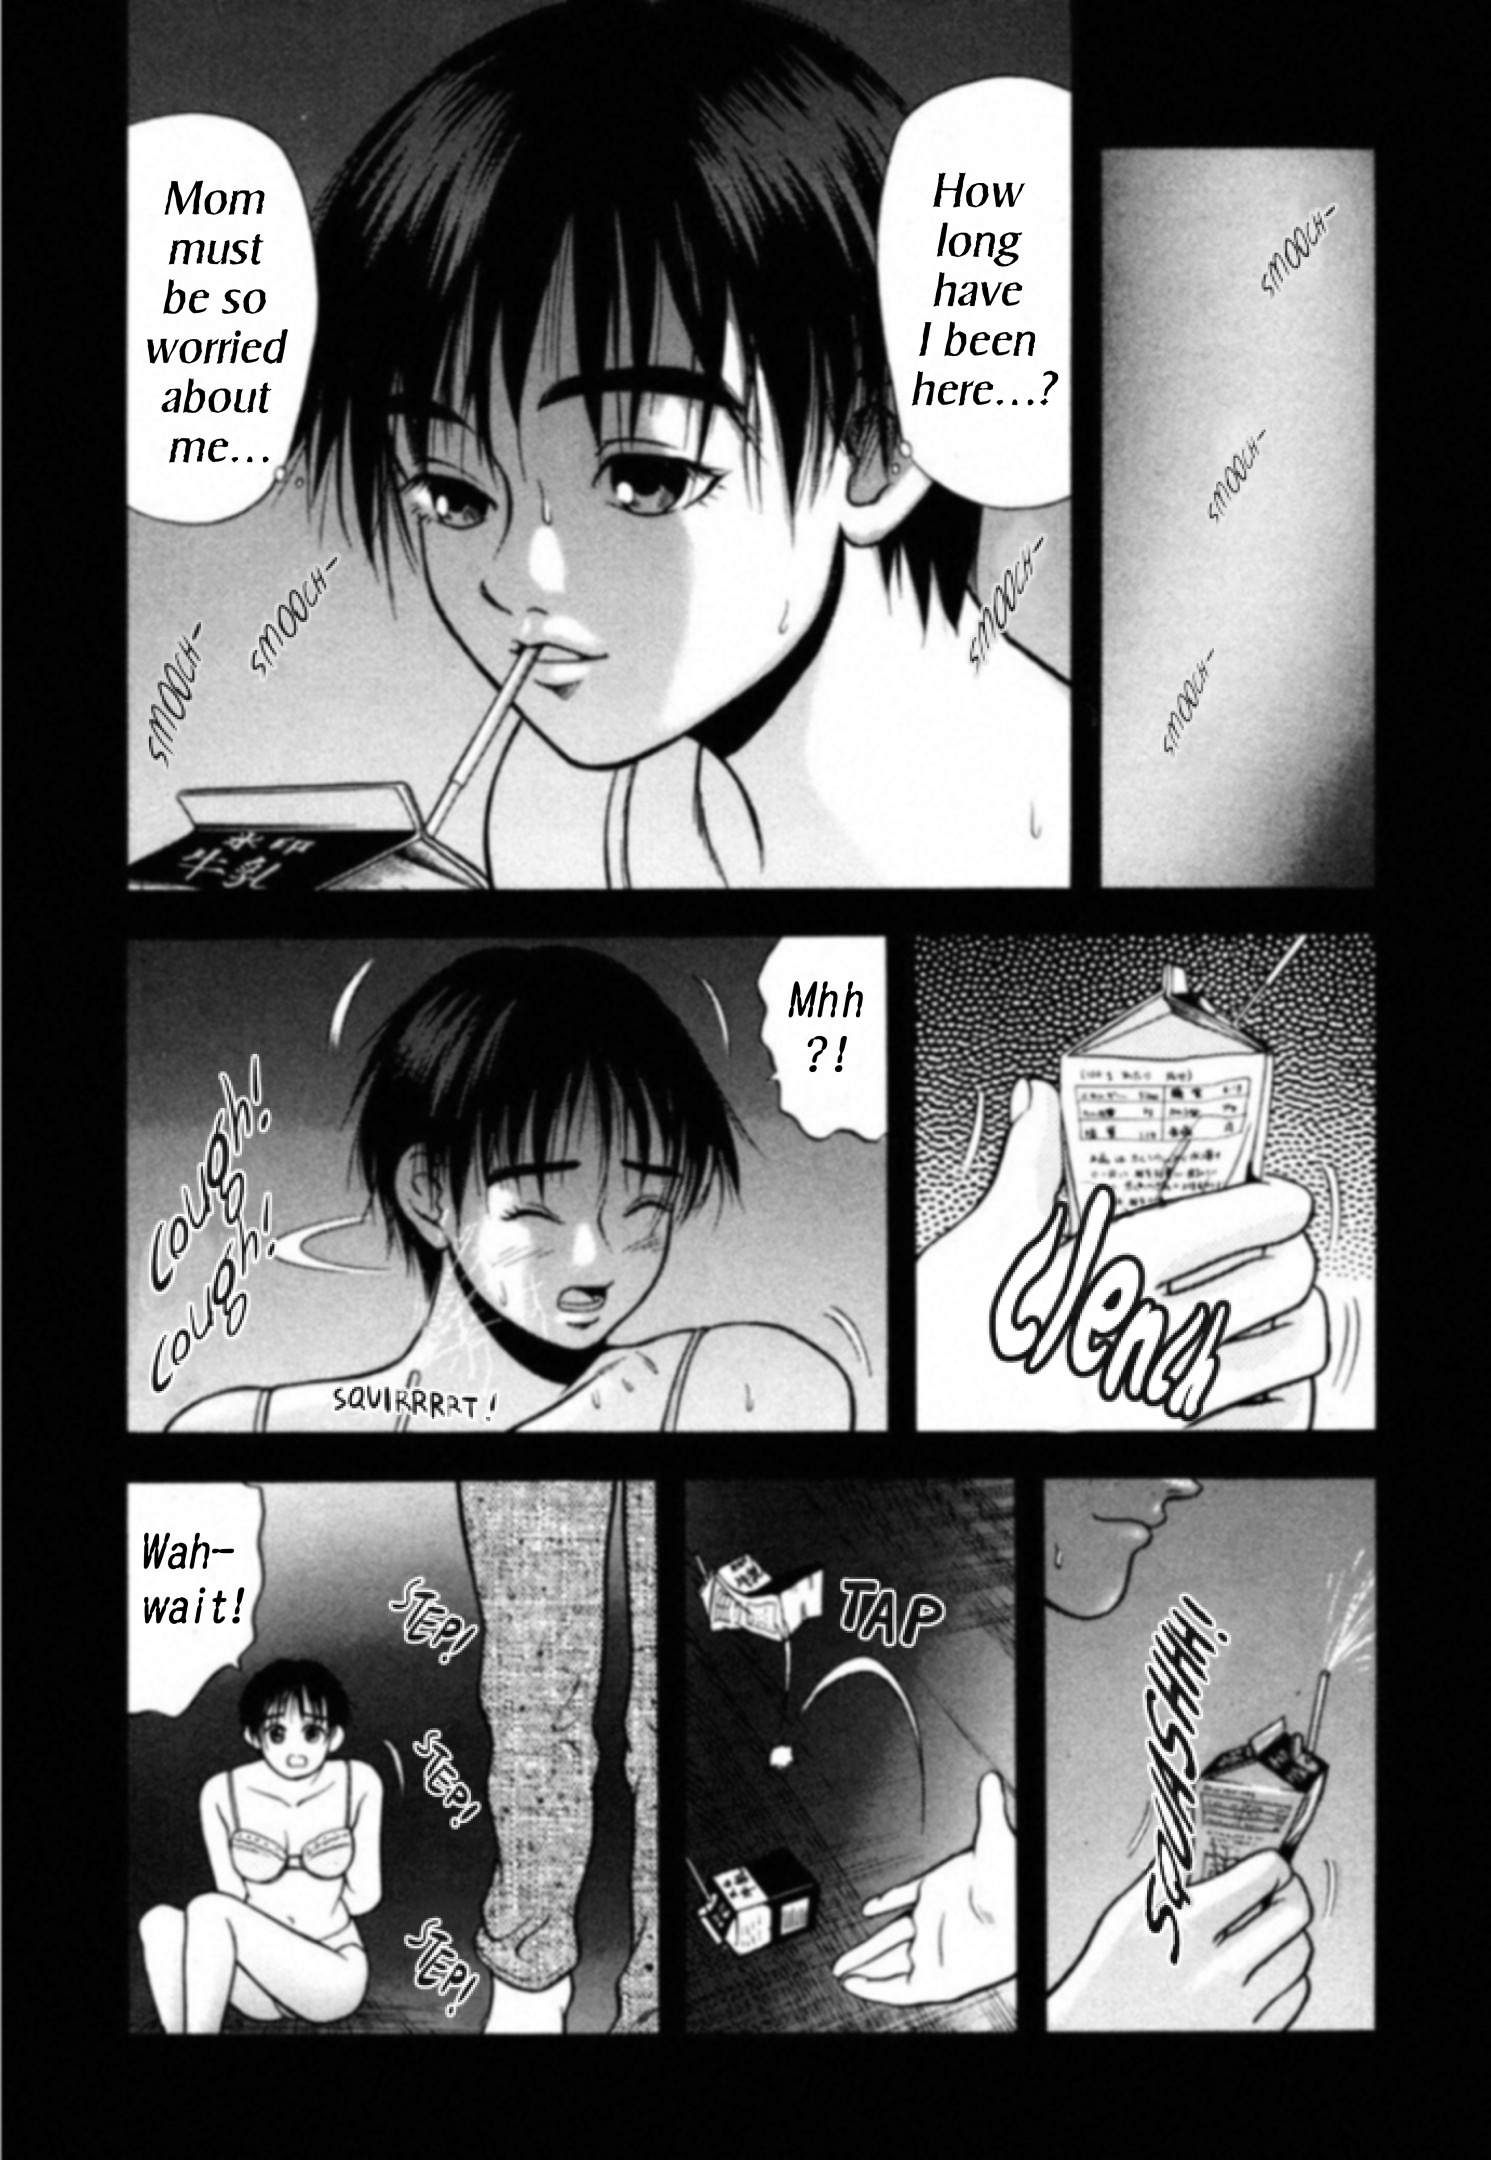 Kakeru Vol.1 Chapter 6: The Runaway Girl - 6 - Picture 3